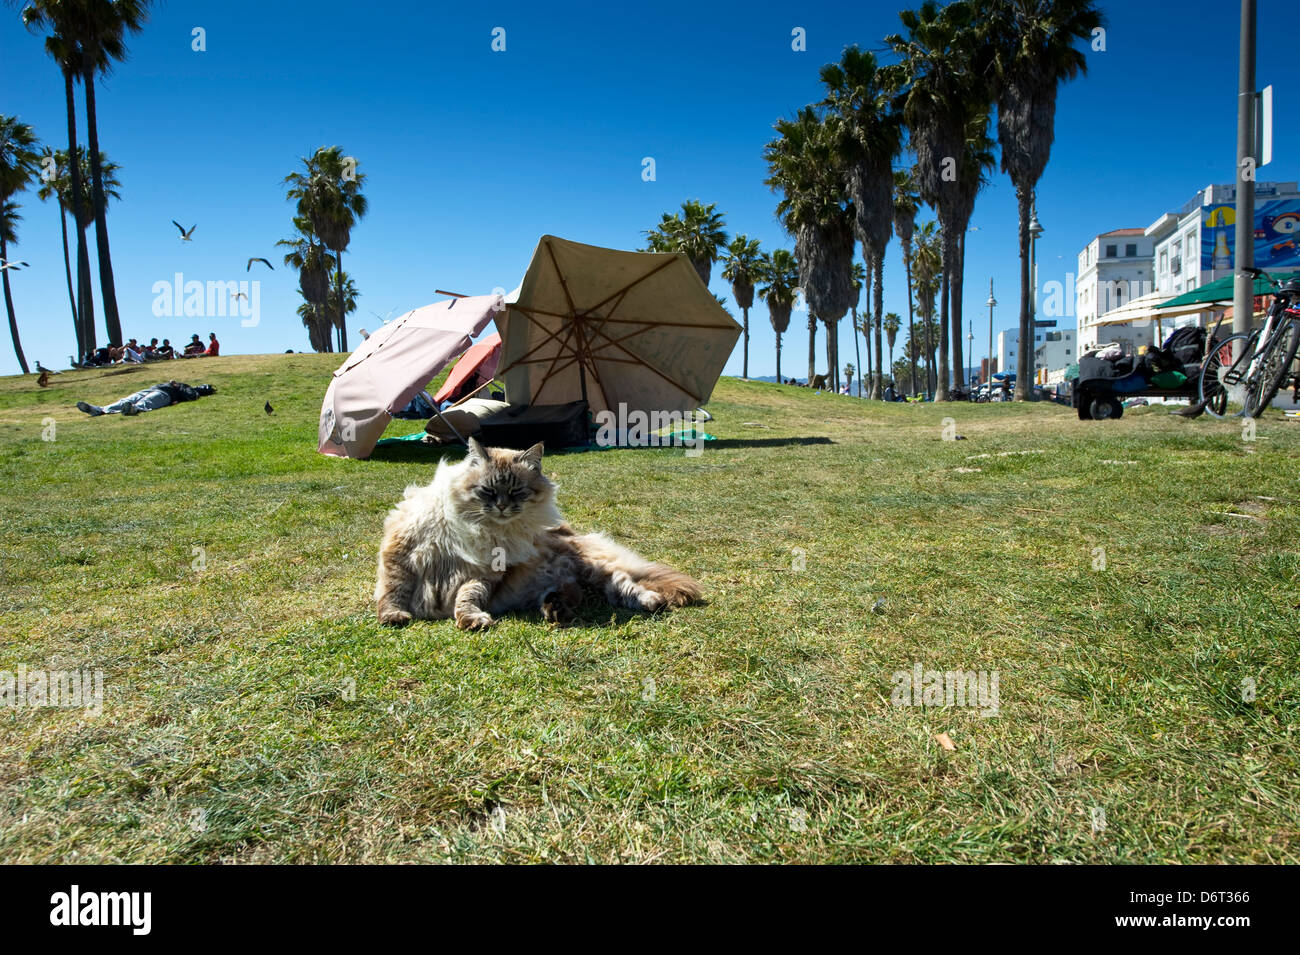 Venice Beach, Santa Monica, California, April 10, 2013: a mangy cat sits among the homeless. Stock Photo